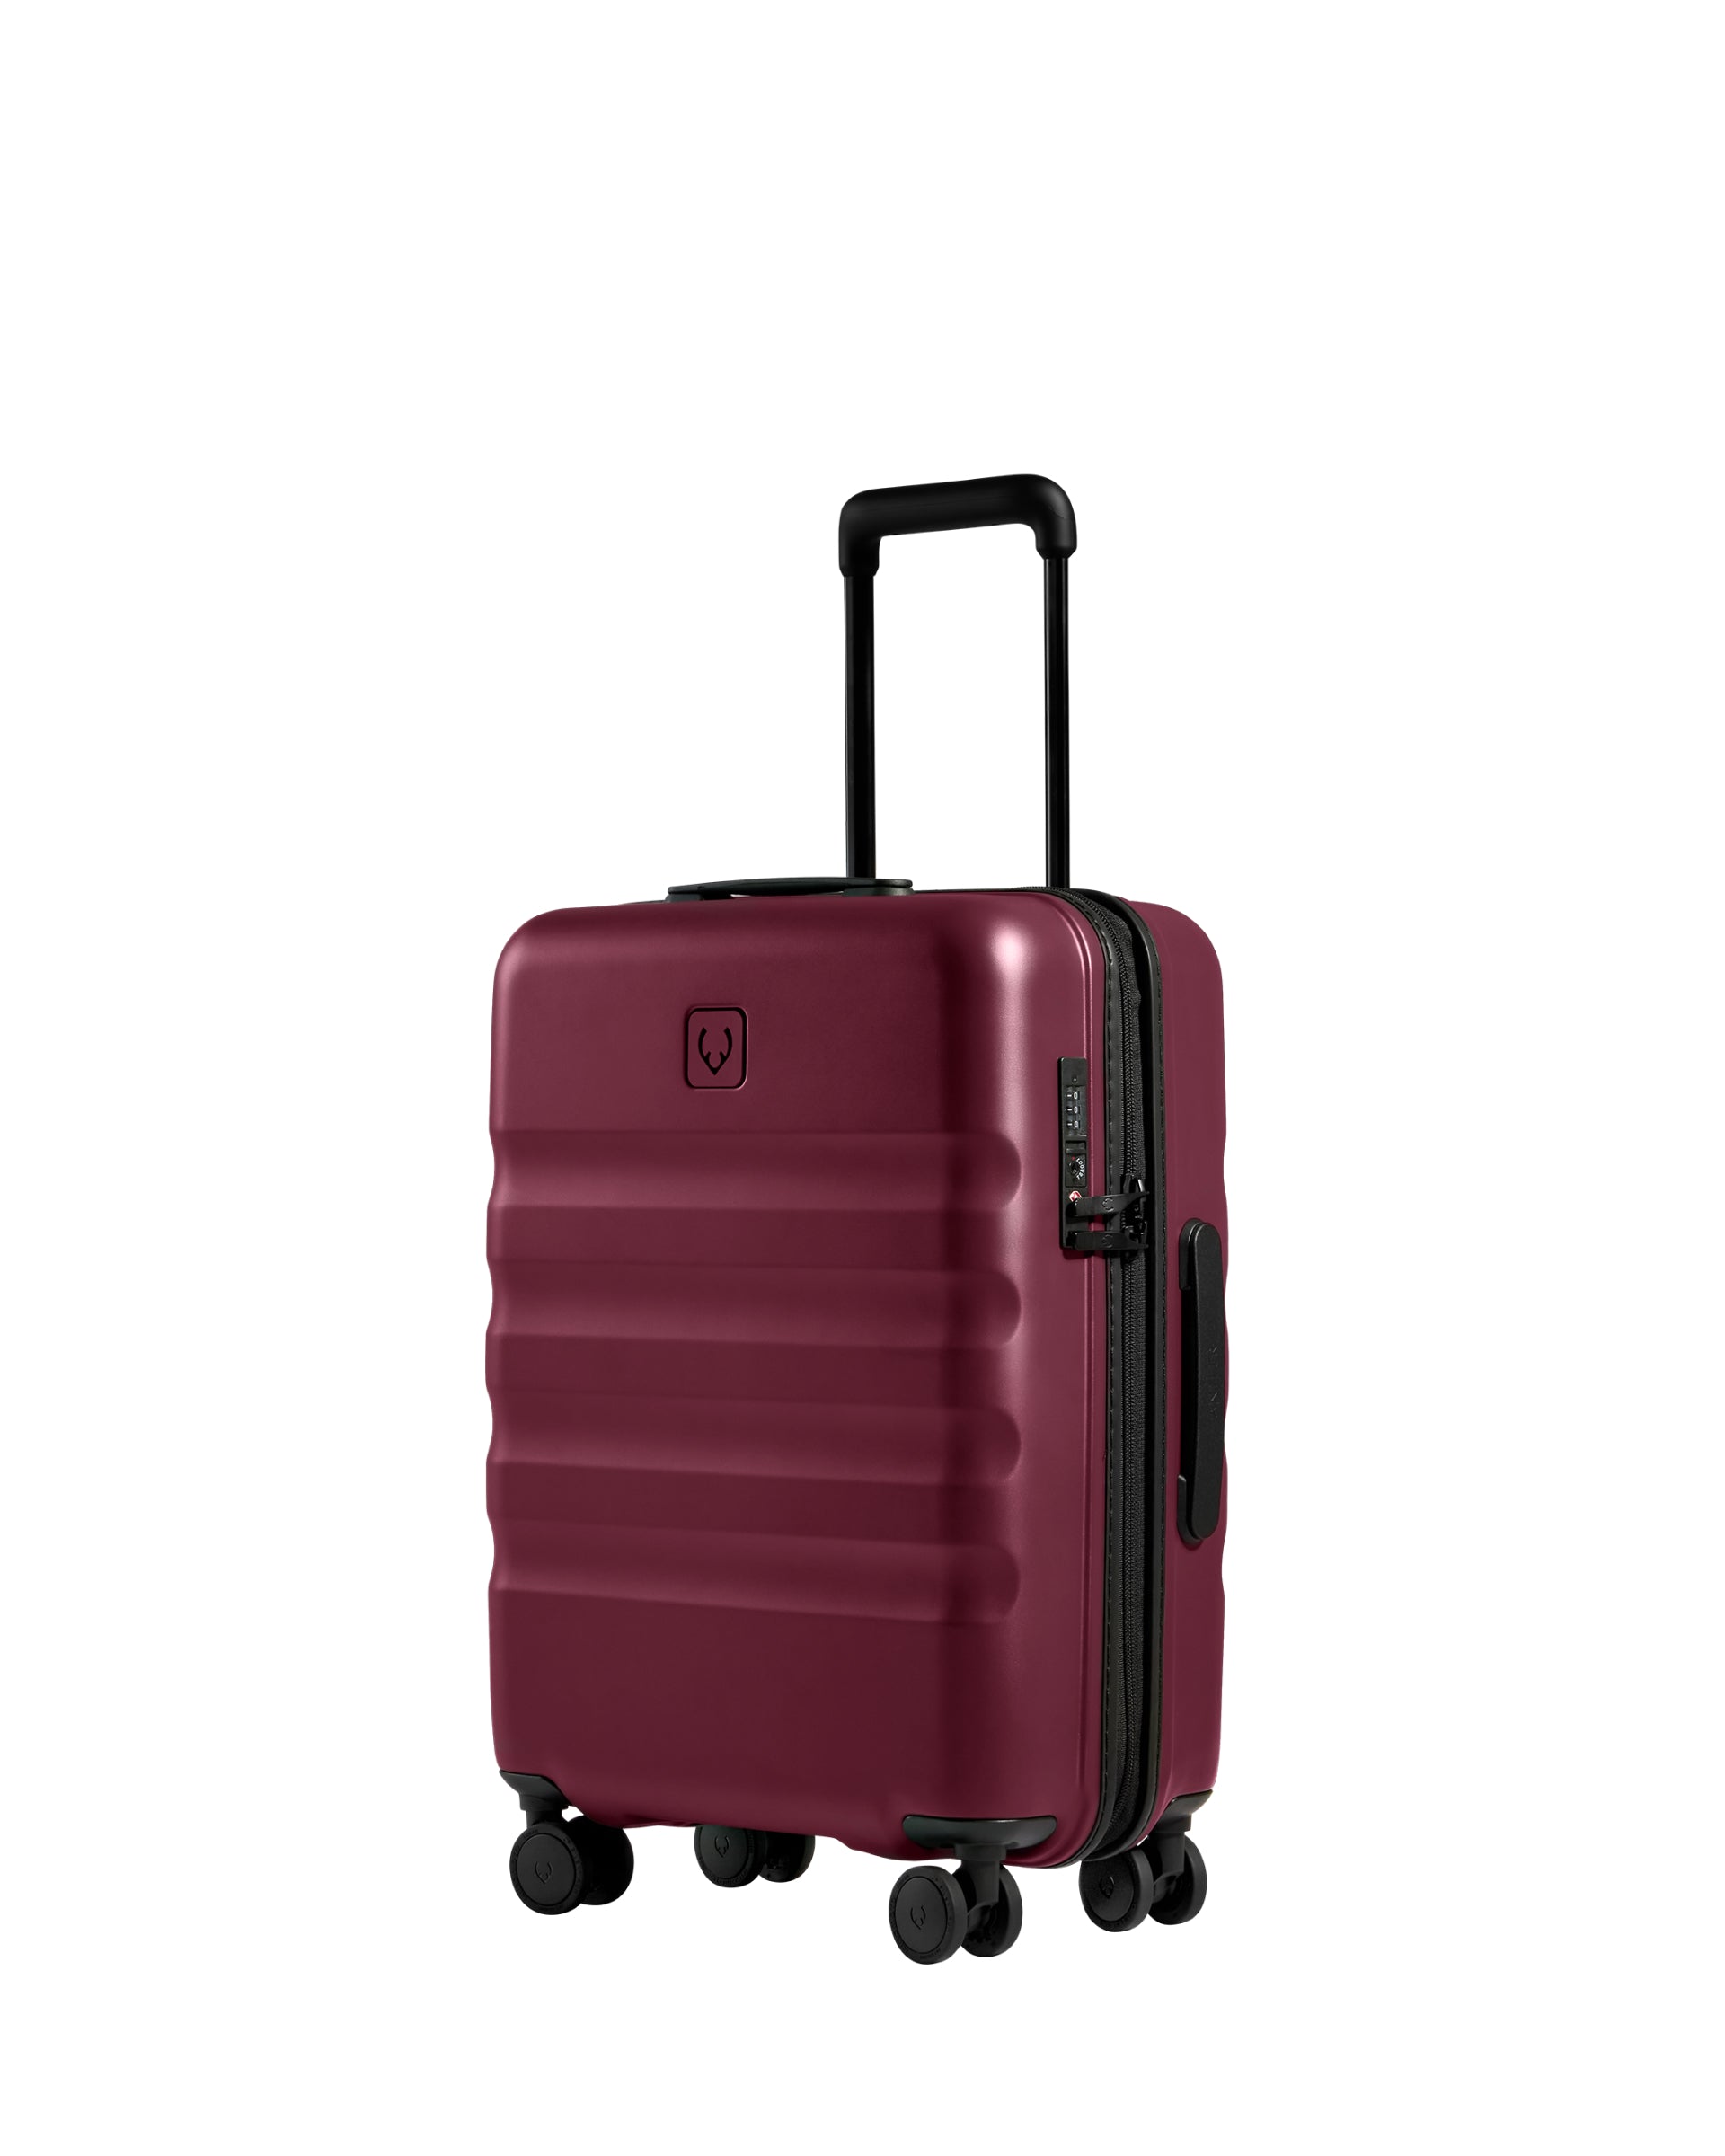 View Antler Icon Stripe Cabin Suitcase In Heather Purple Size 20cm x 55cm x 40cm information